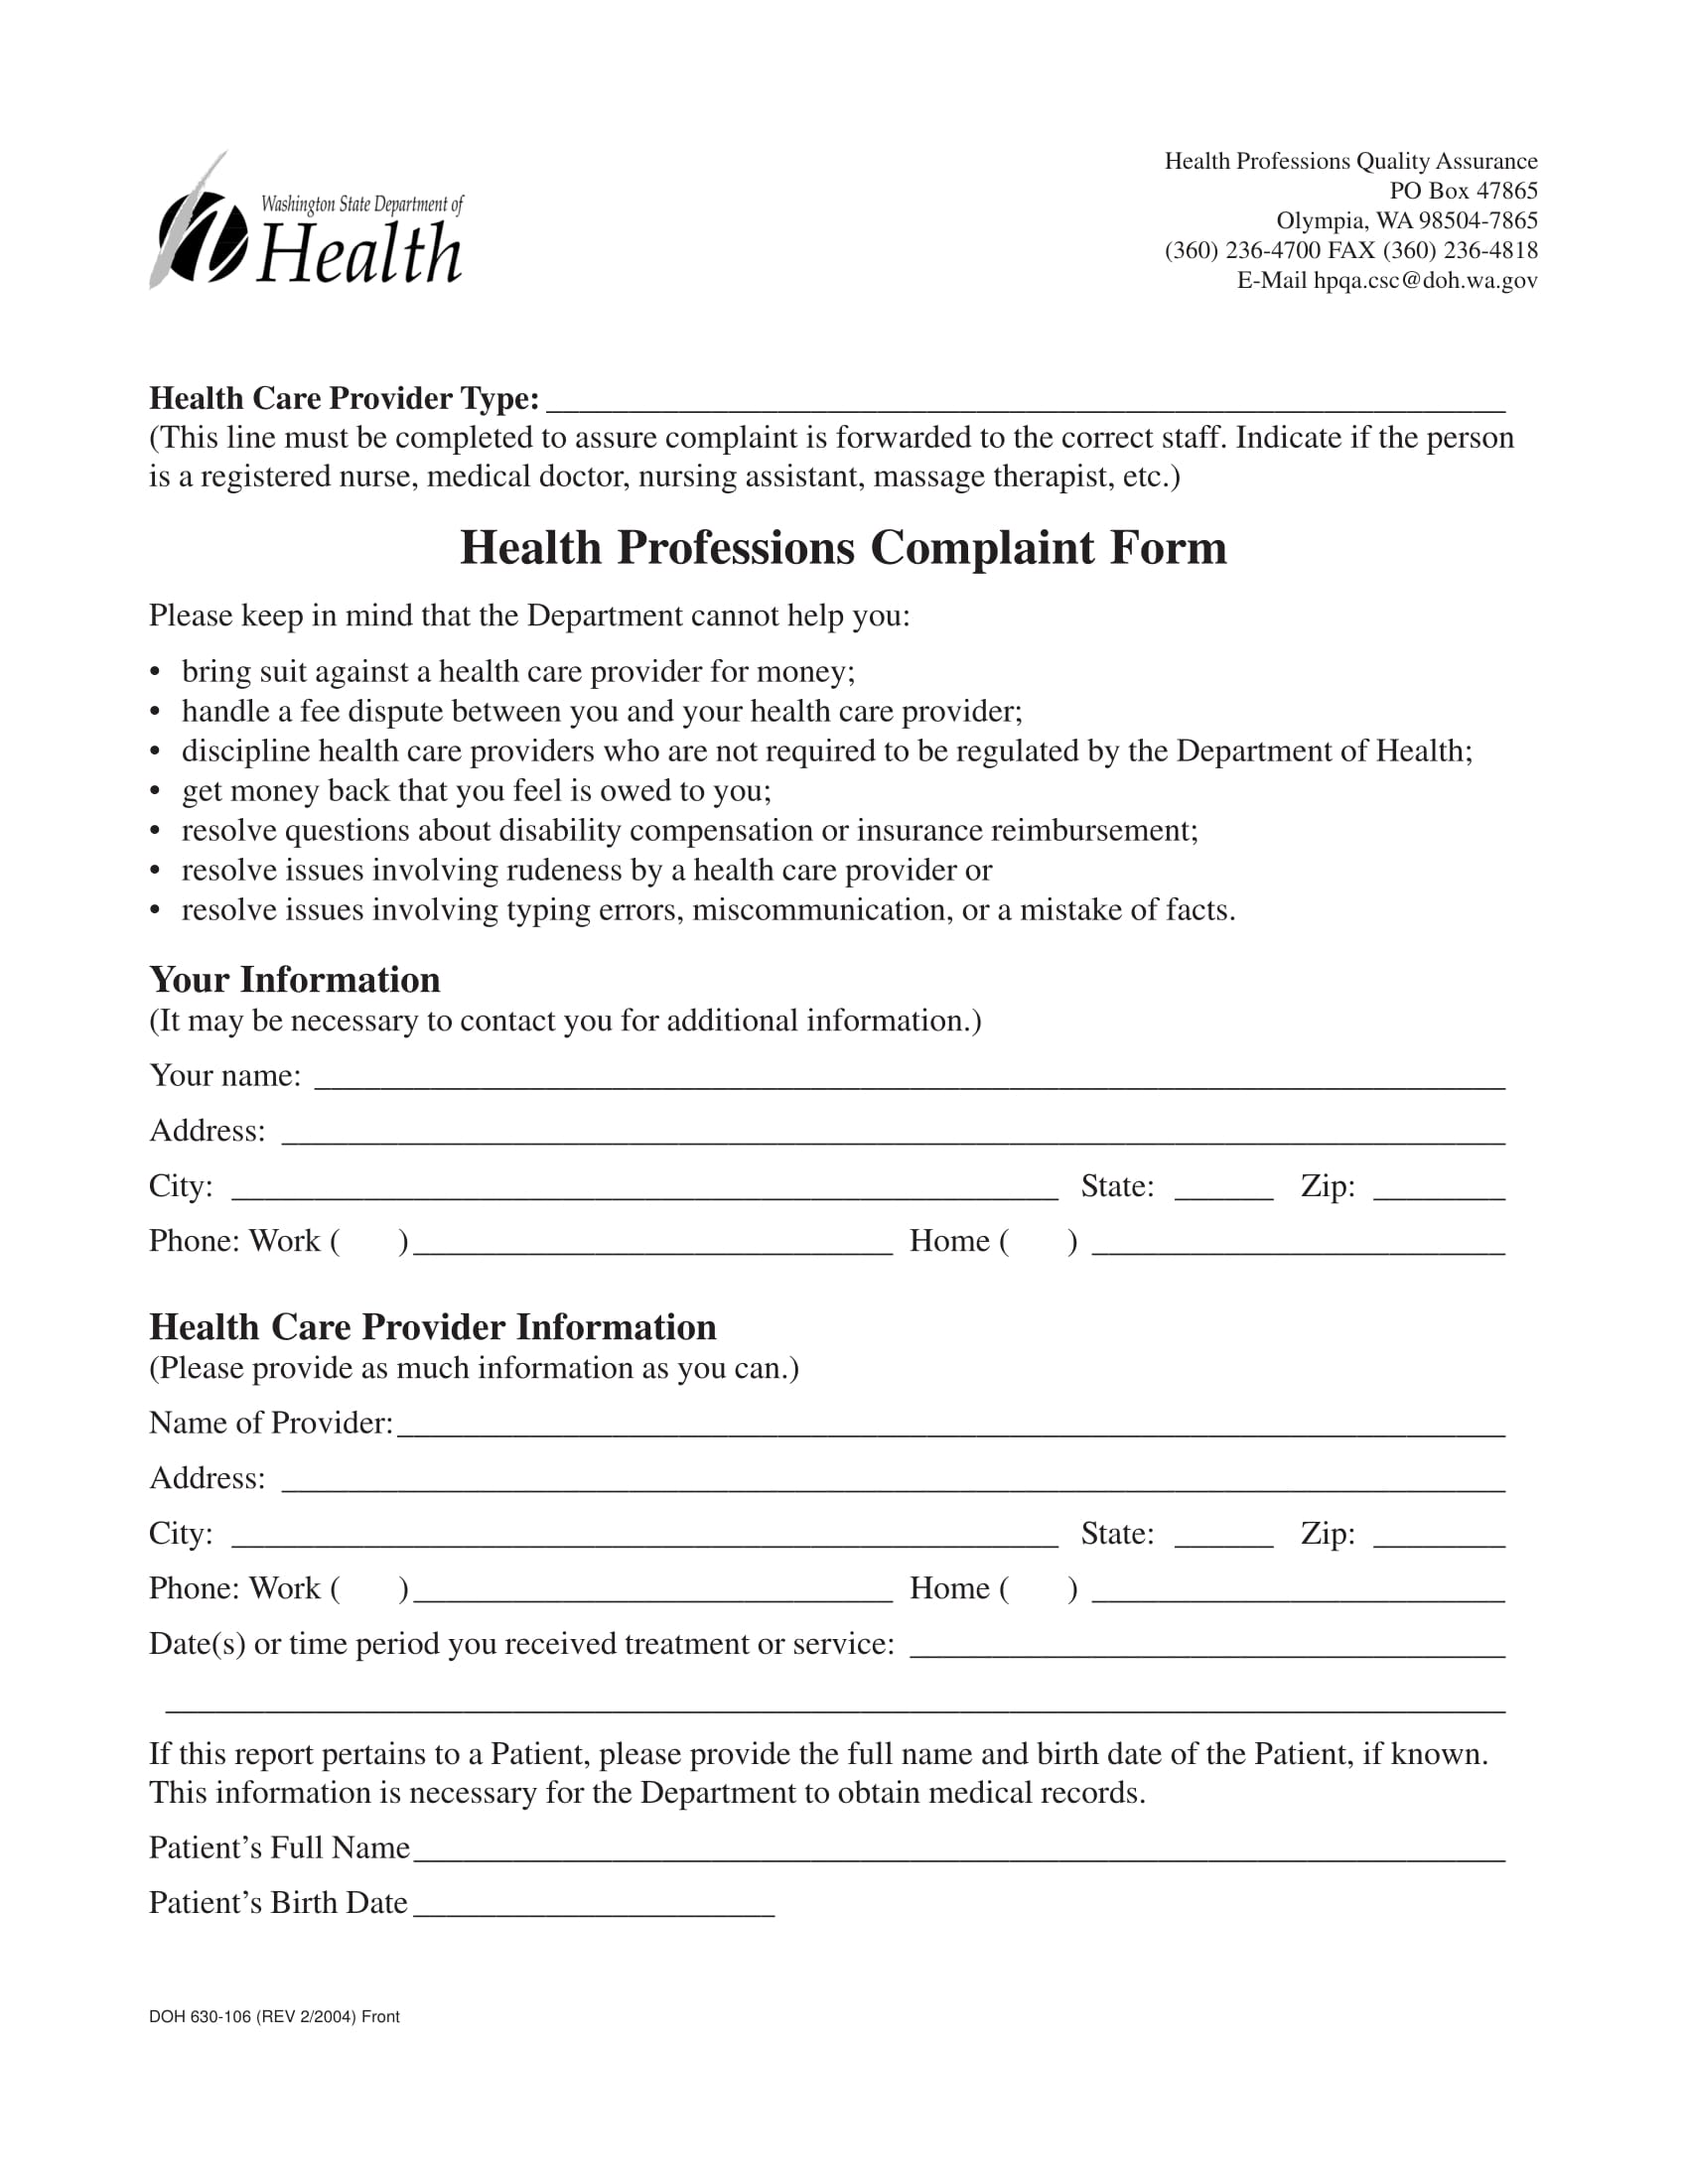 health professions complaint form 1